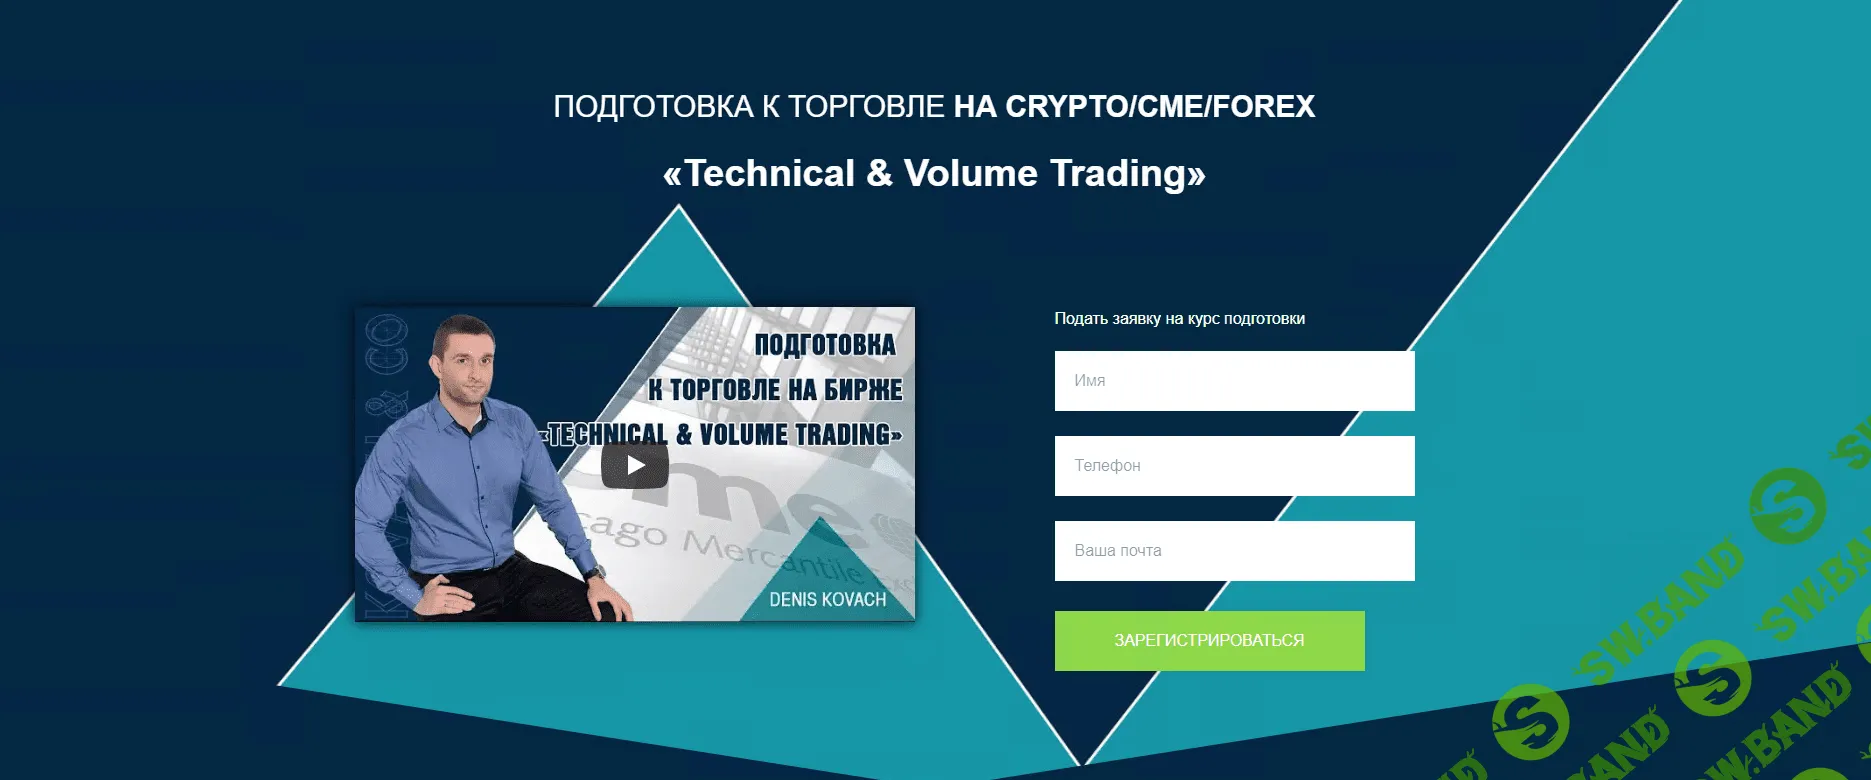 [Денис Ковач] Подготовка к торговле на CRYPTO/CME/FOREX. «Technical & Volume Trading» (2018)